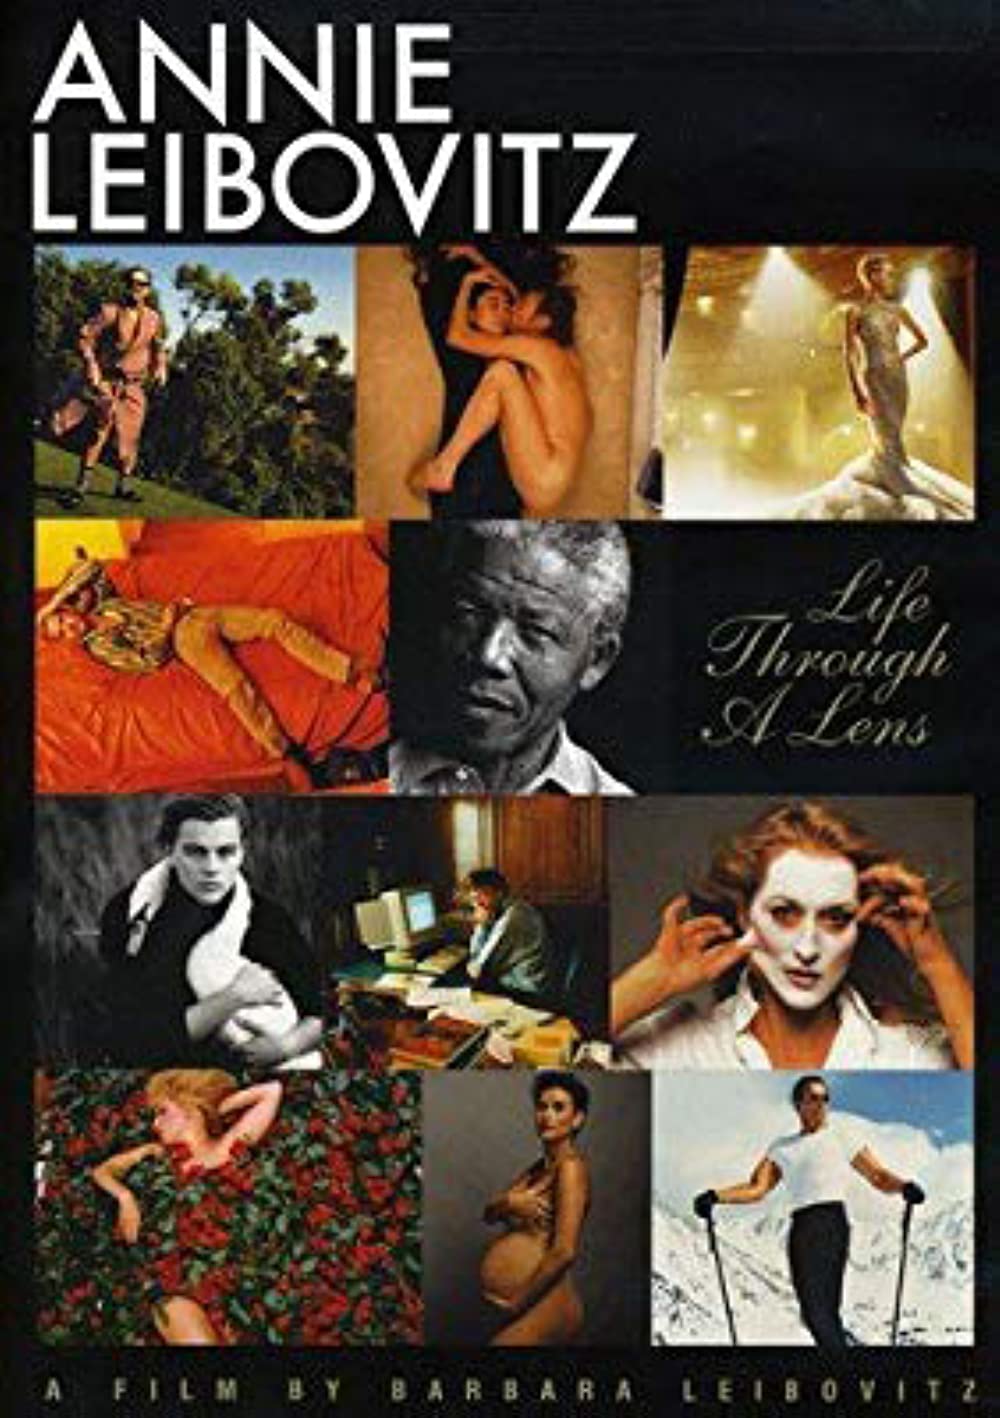 Filmbeschreibung zu American Masters - Annie Leibovitz: Life through a Lens